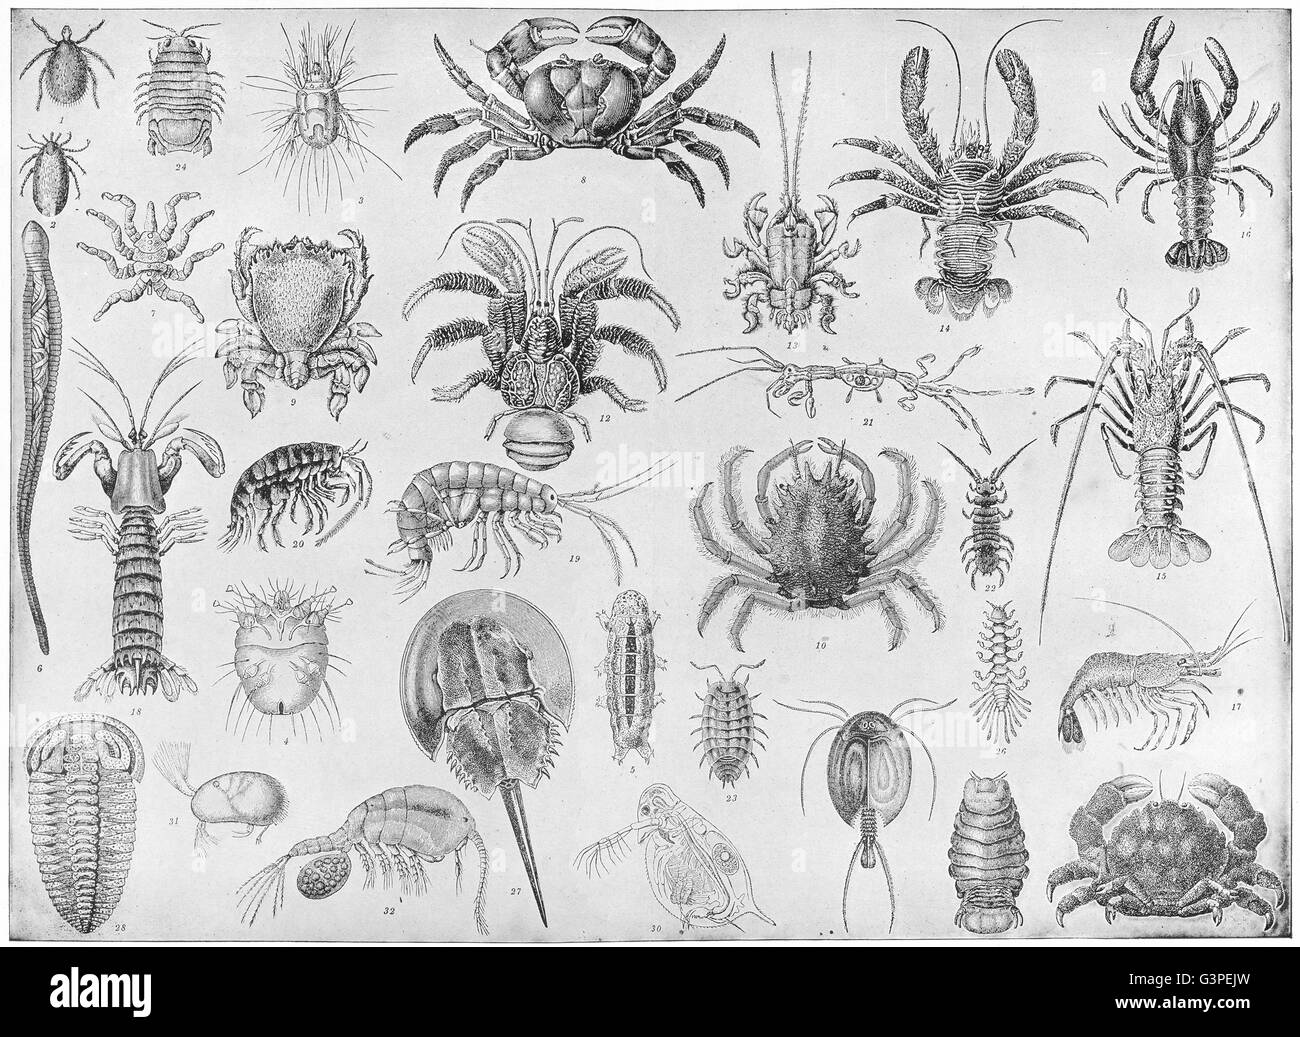 CRUSTACEA: Crab bug louse flea shrimp crayfish prawn lobster Ione Cypria, 1907 Stock Photo